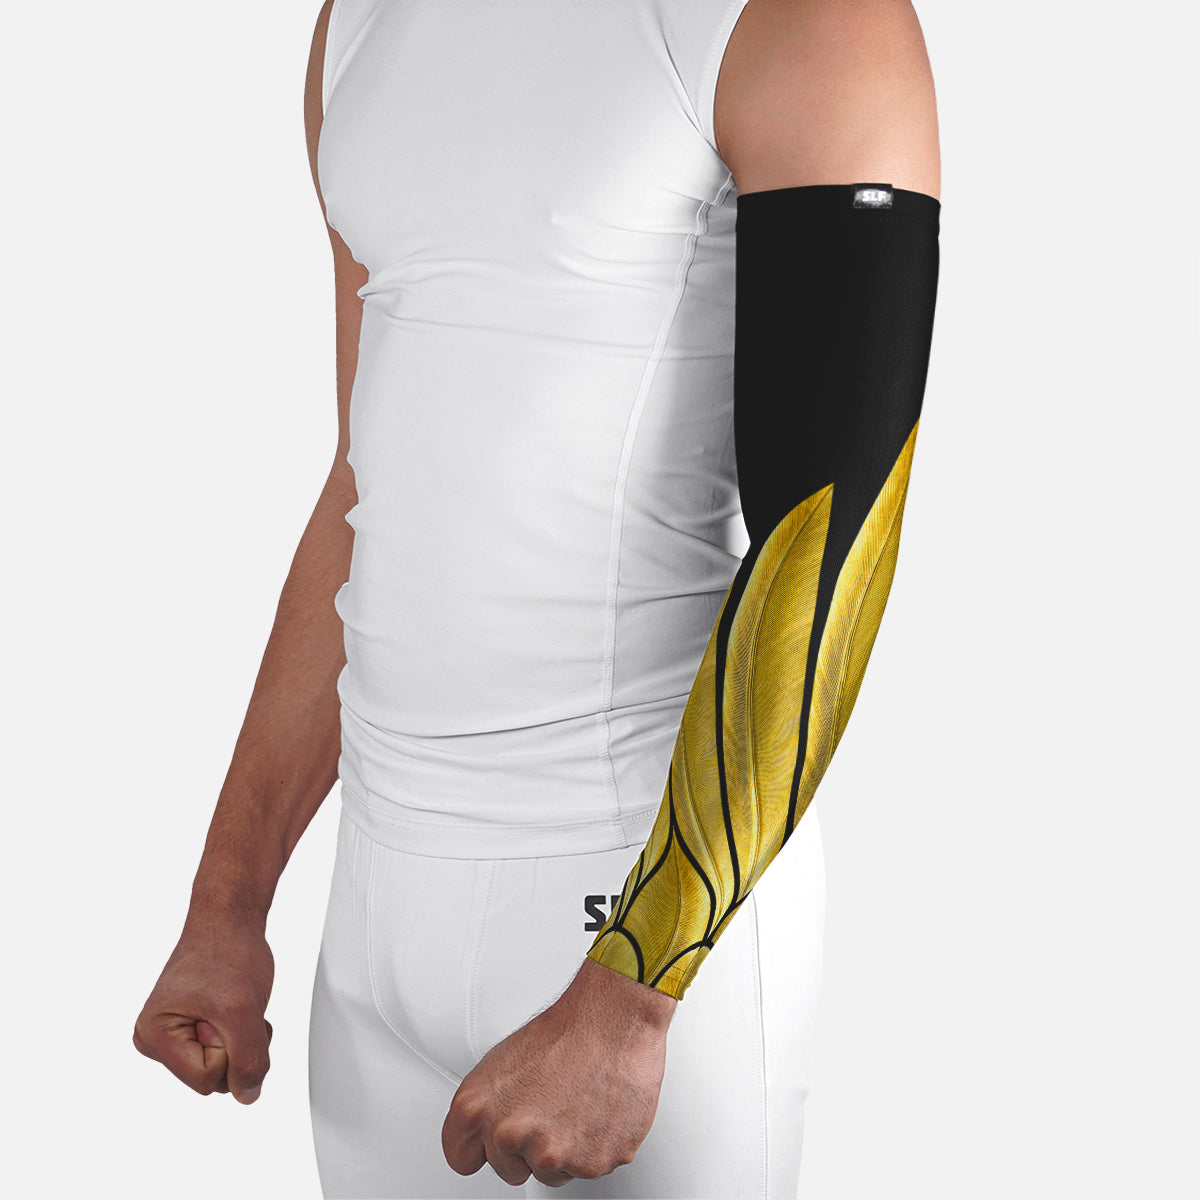 Icarus Black Gold Arm sleeve